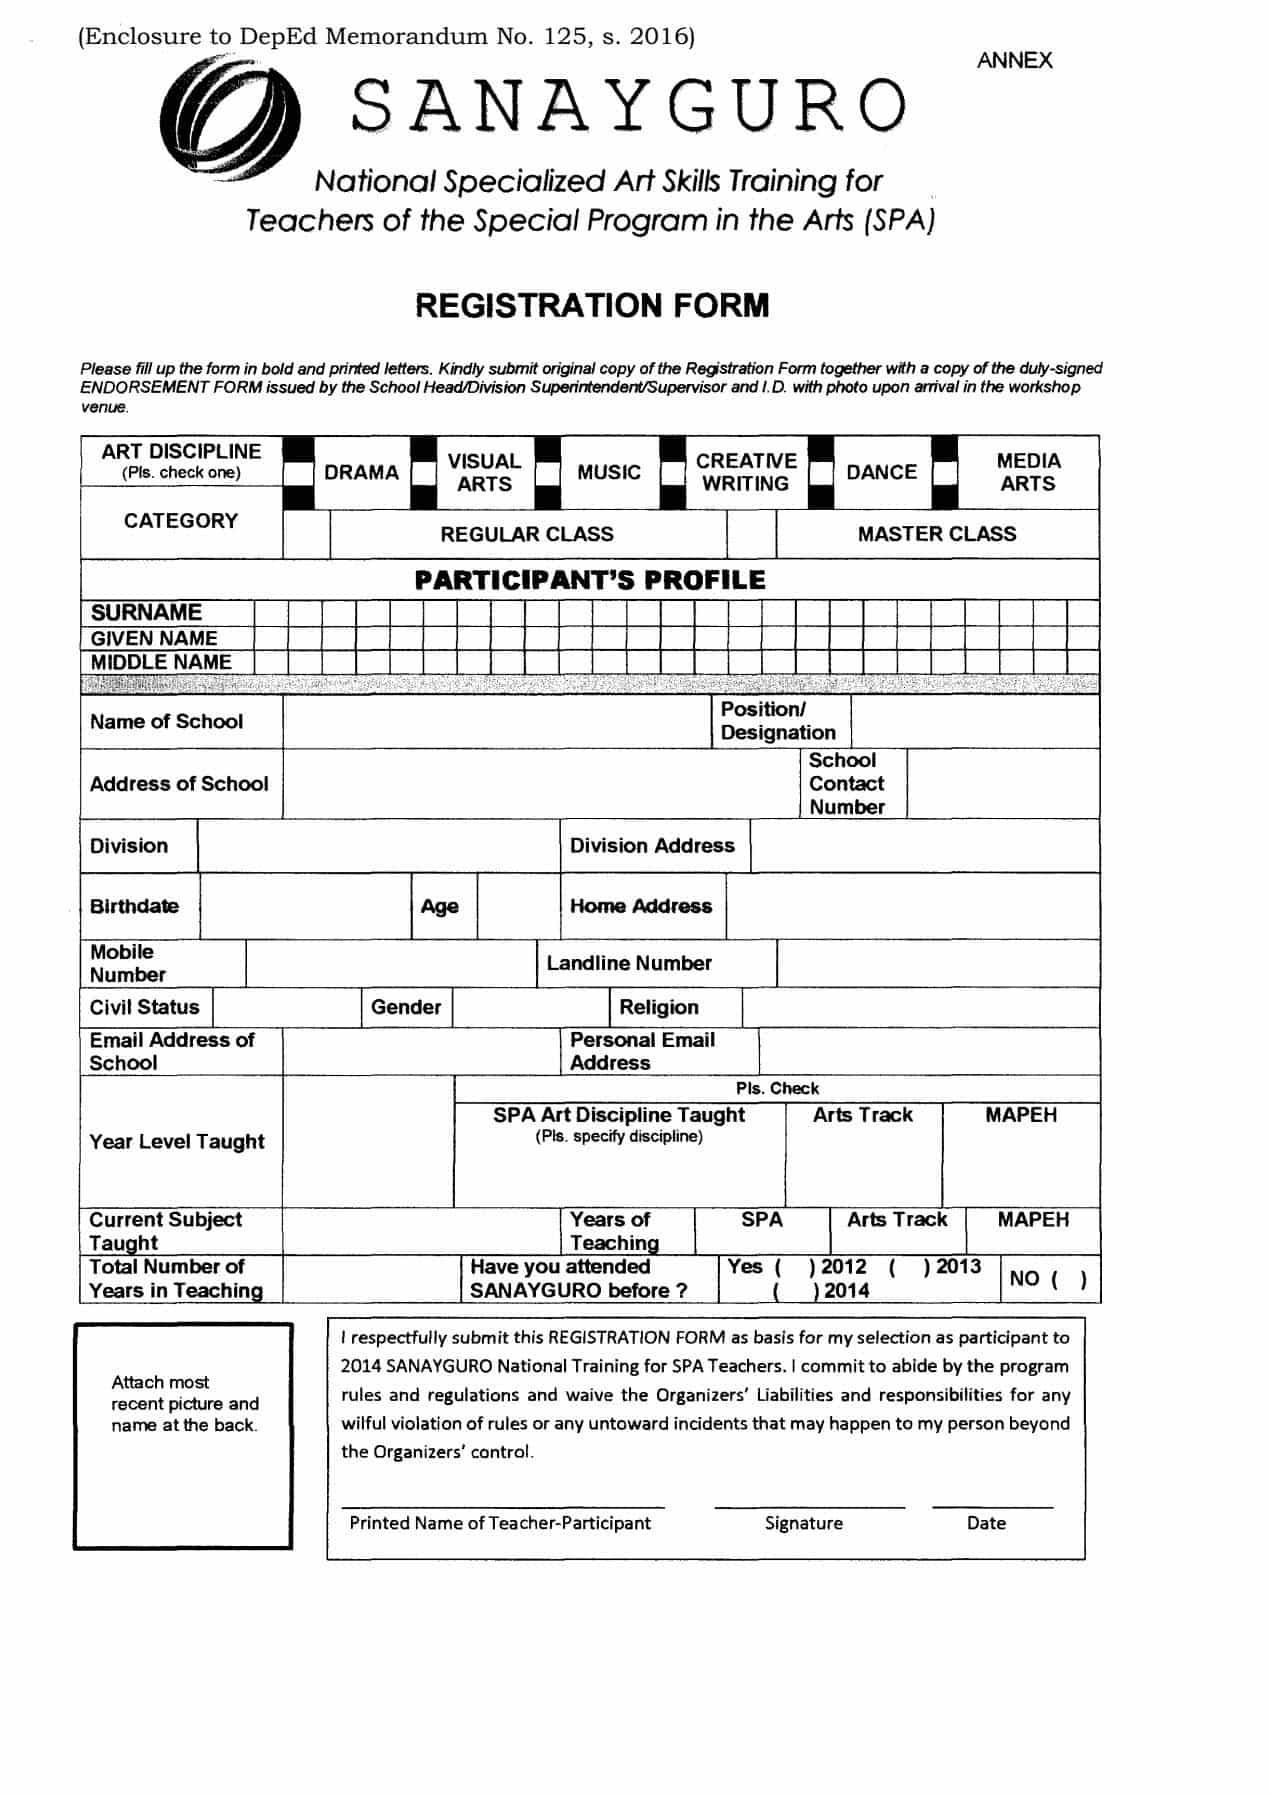 Sanayguro registration form